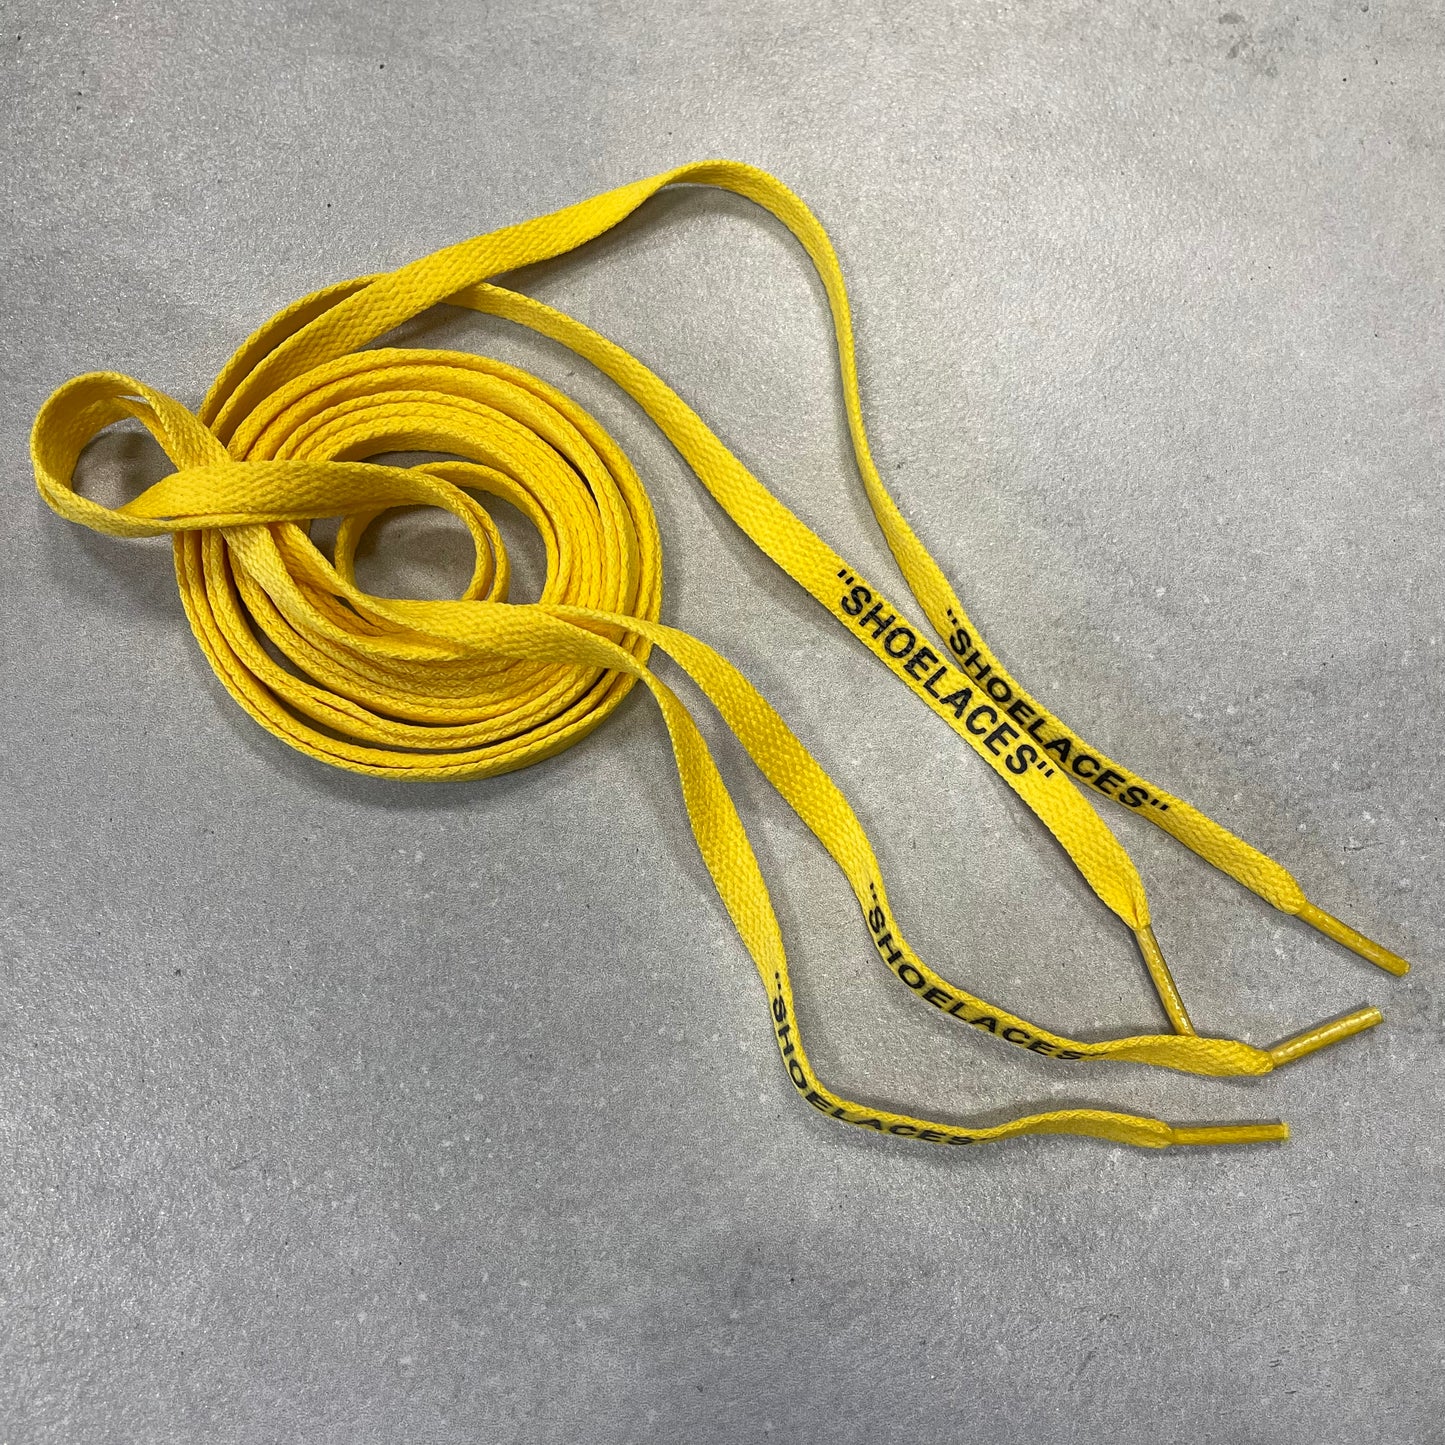 OFF WHITE "shoelaces" yellow